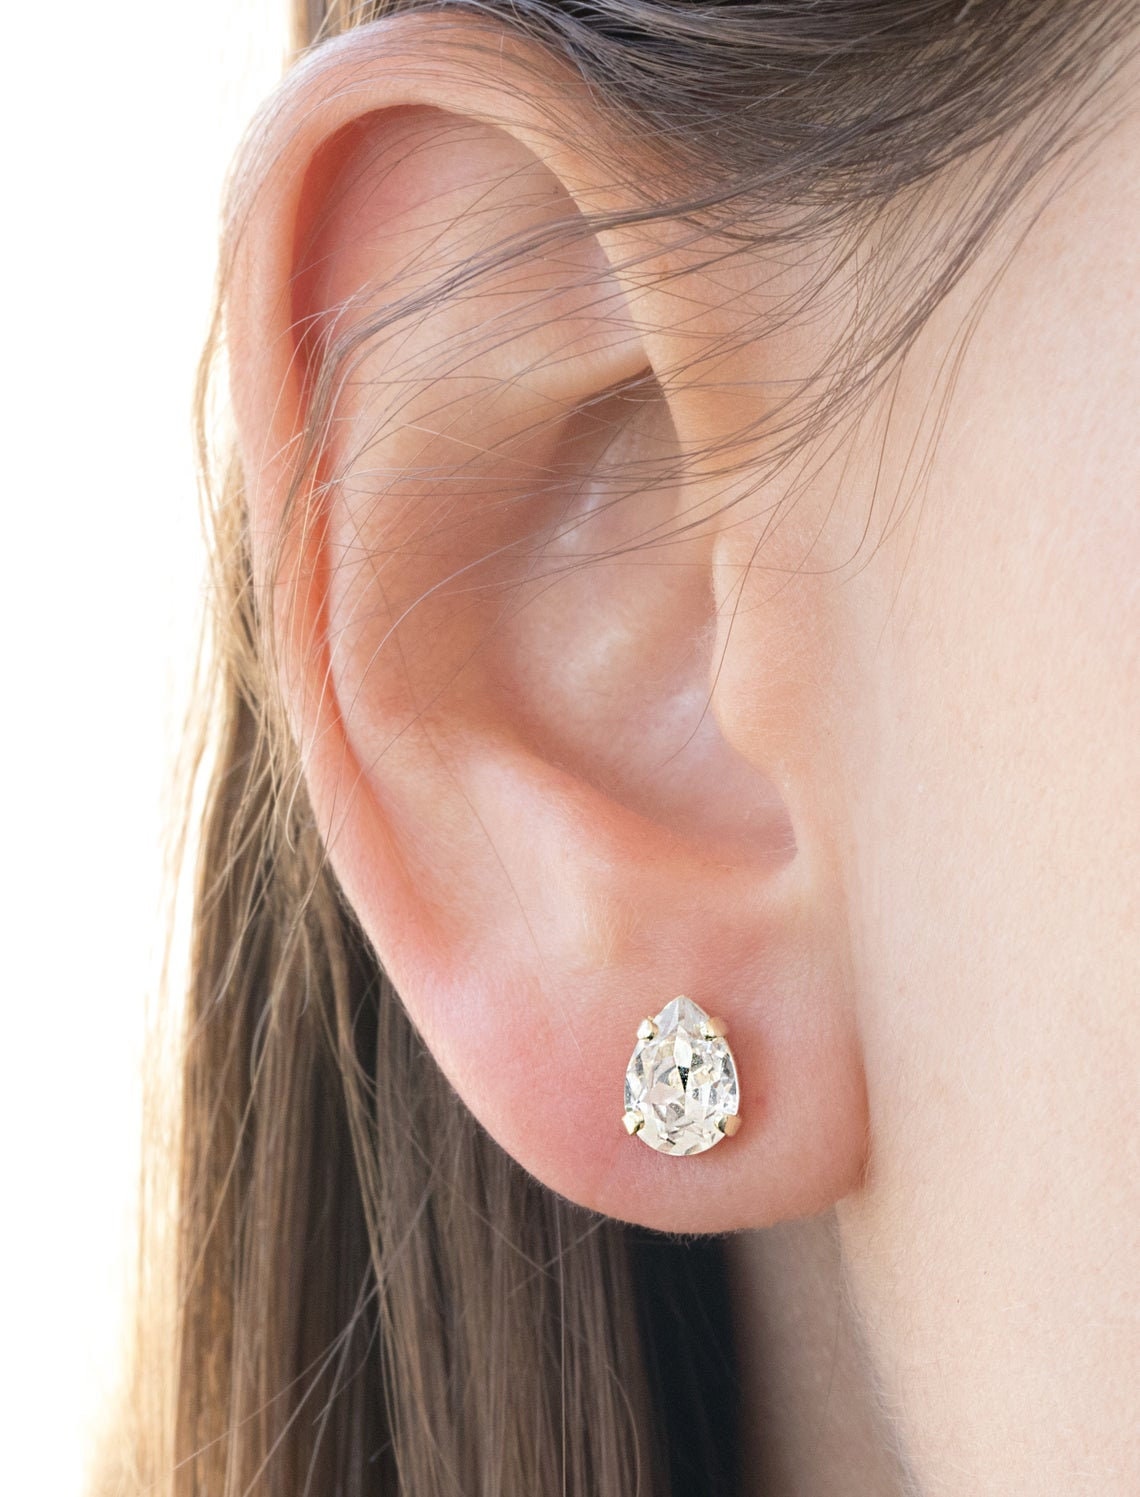 925 Sterling Silver Tiny Pear Shape/Tear Drop Crystal Gemstone Stud Earrings Handmade by MiYa Jewelry Creations Trendy Dainty Studs 